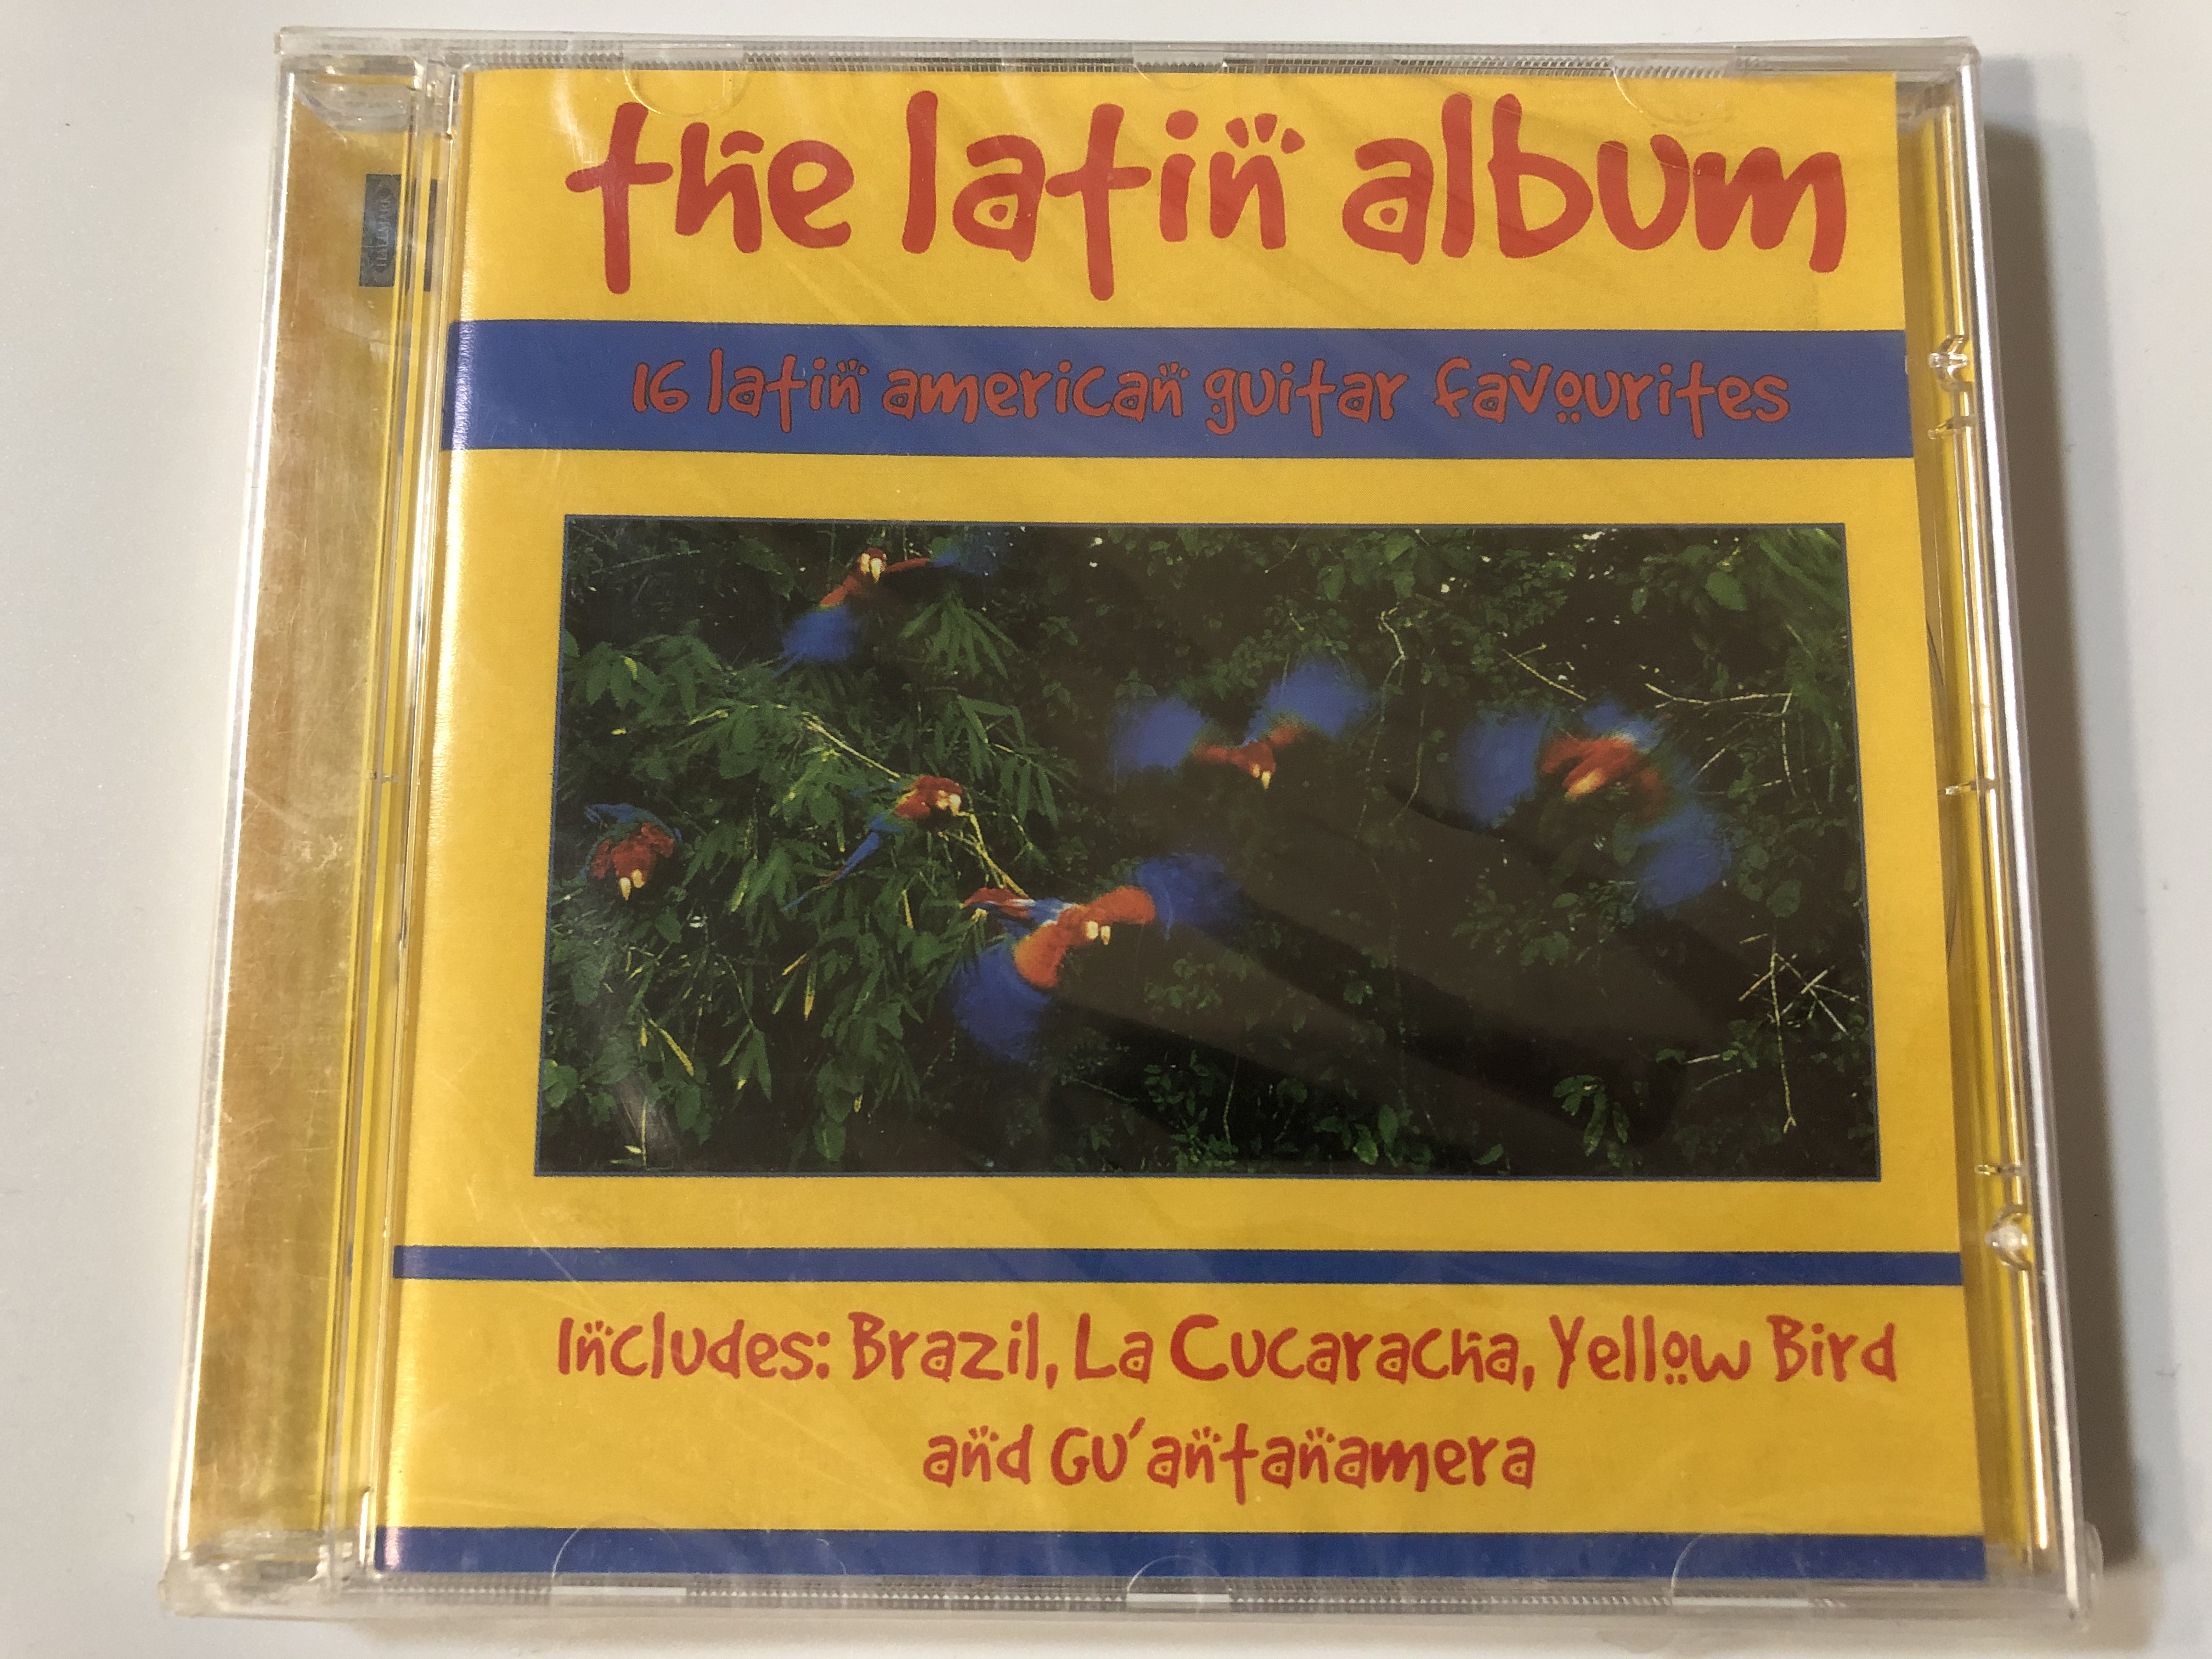 the-latin-album-16-latin-american-guitar-favourites-includes-brazil-la-cucaracha-yellow-bird-and-guantamanera-hallmark-records-audio-cd-2002-700802-1-.jpg